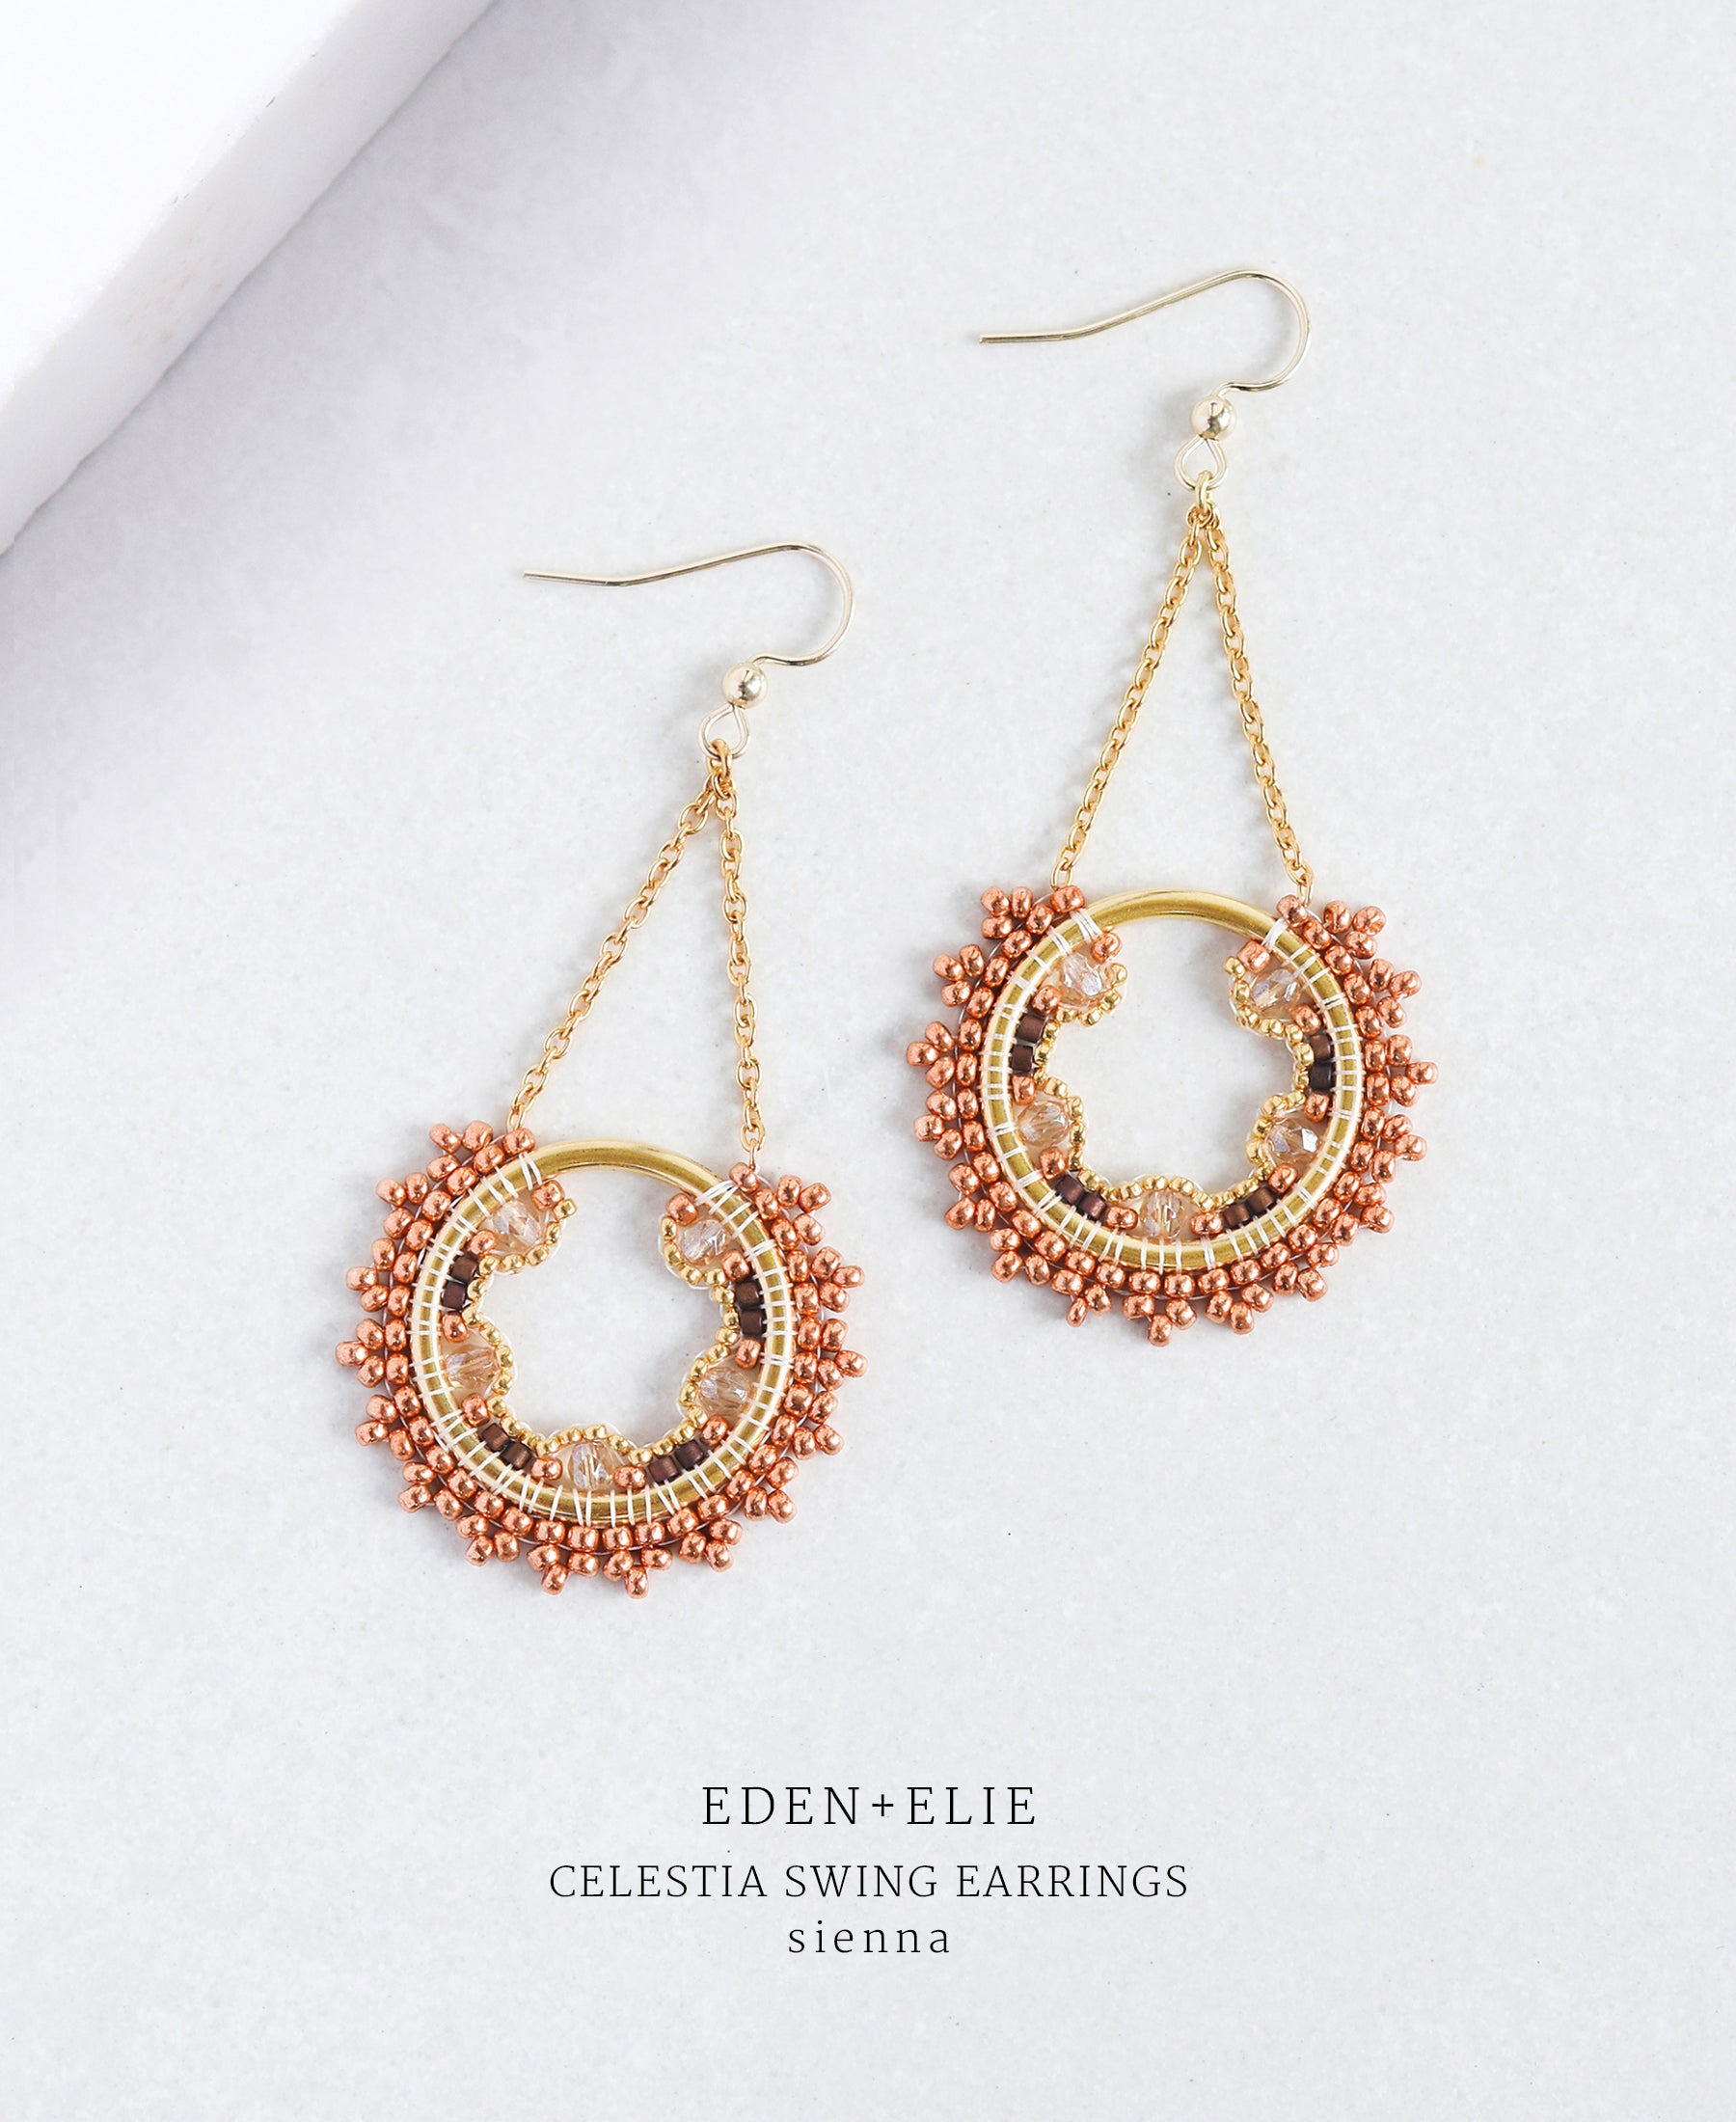 EDEN + ELIE Celestia swing earrings - sienna brown